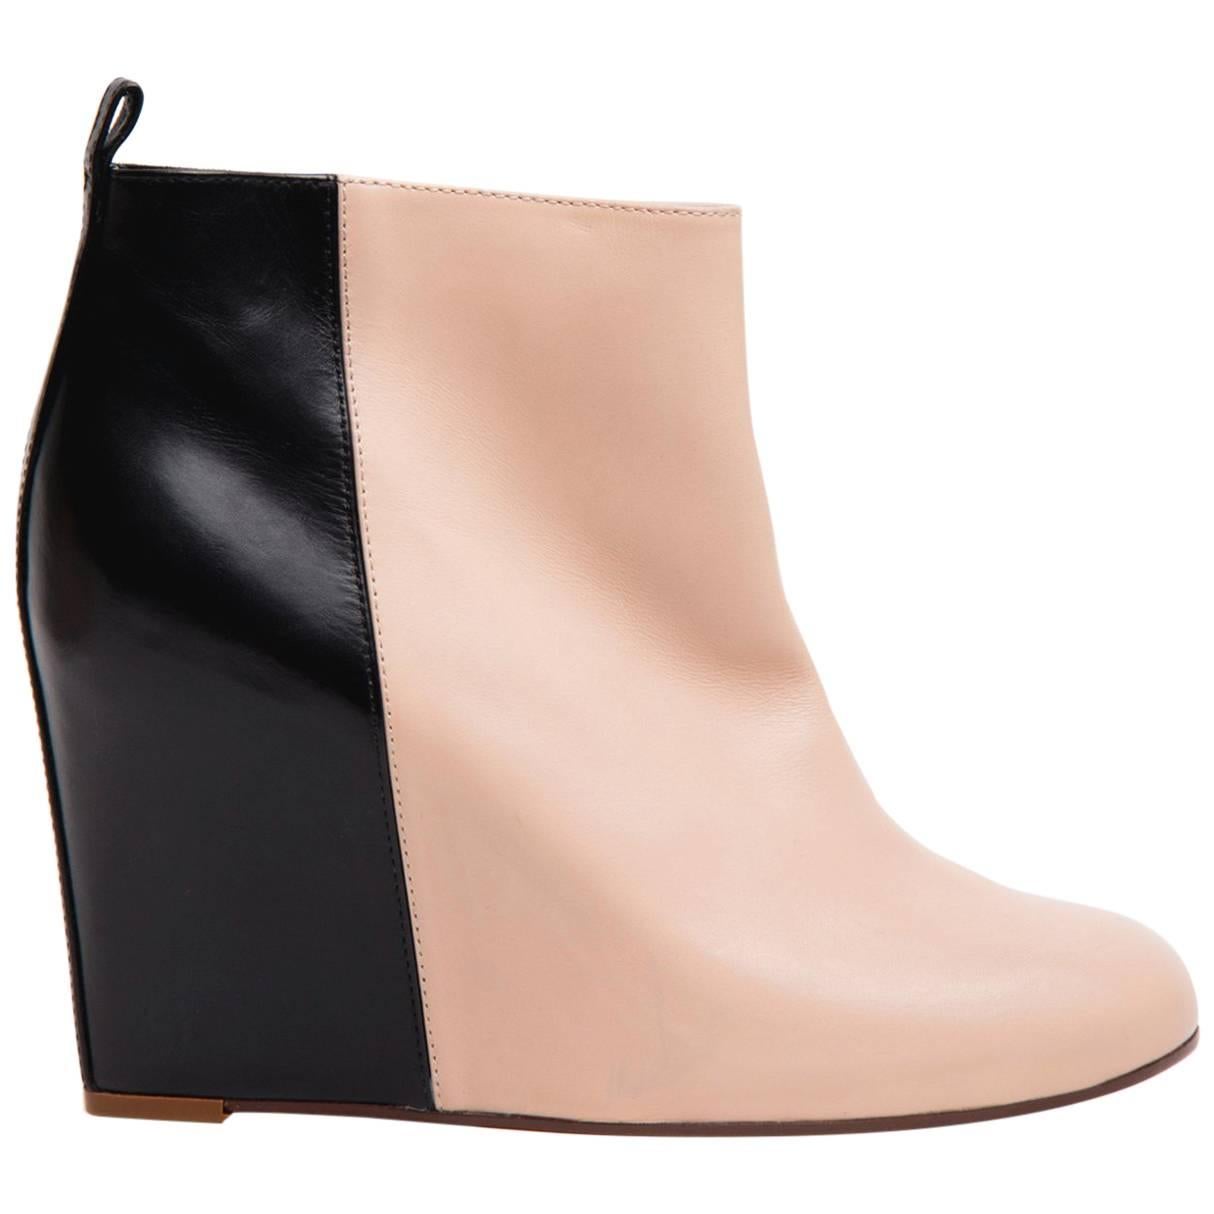 Celine Black & Pink Wedge Ankle Boots For Sale